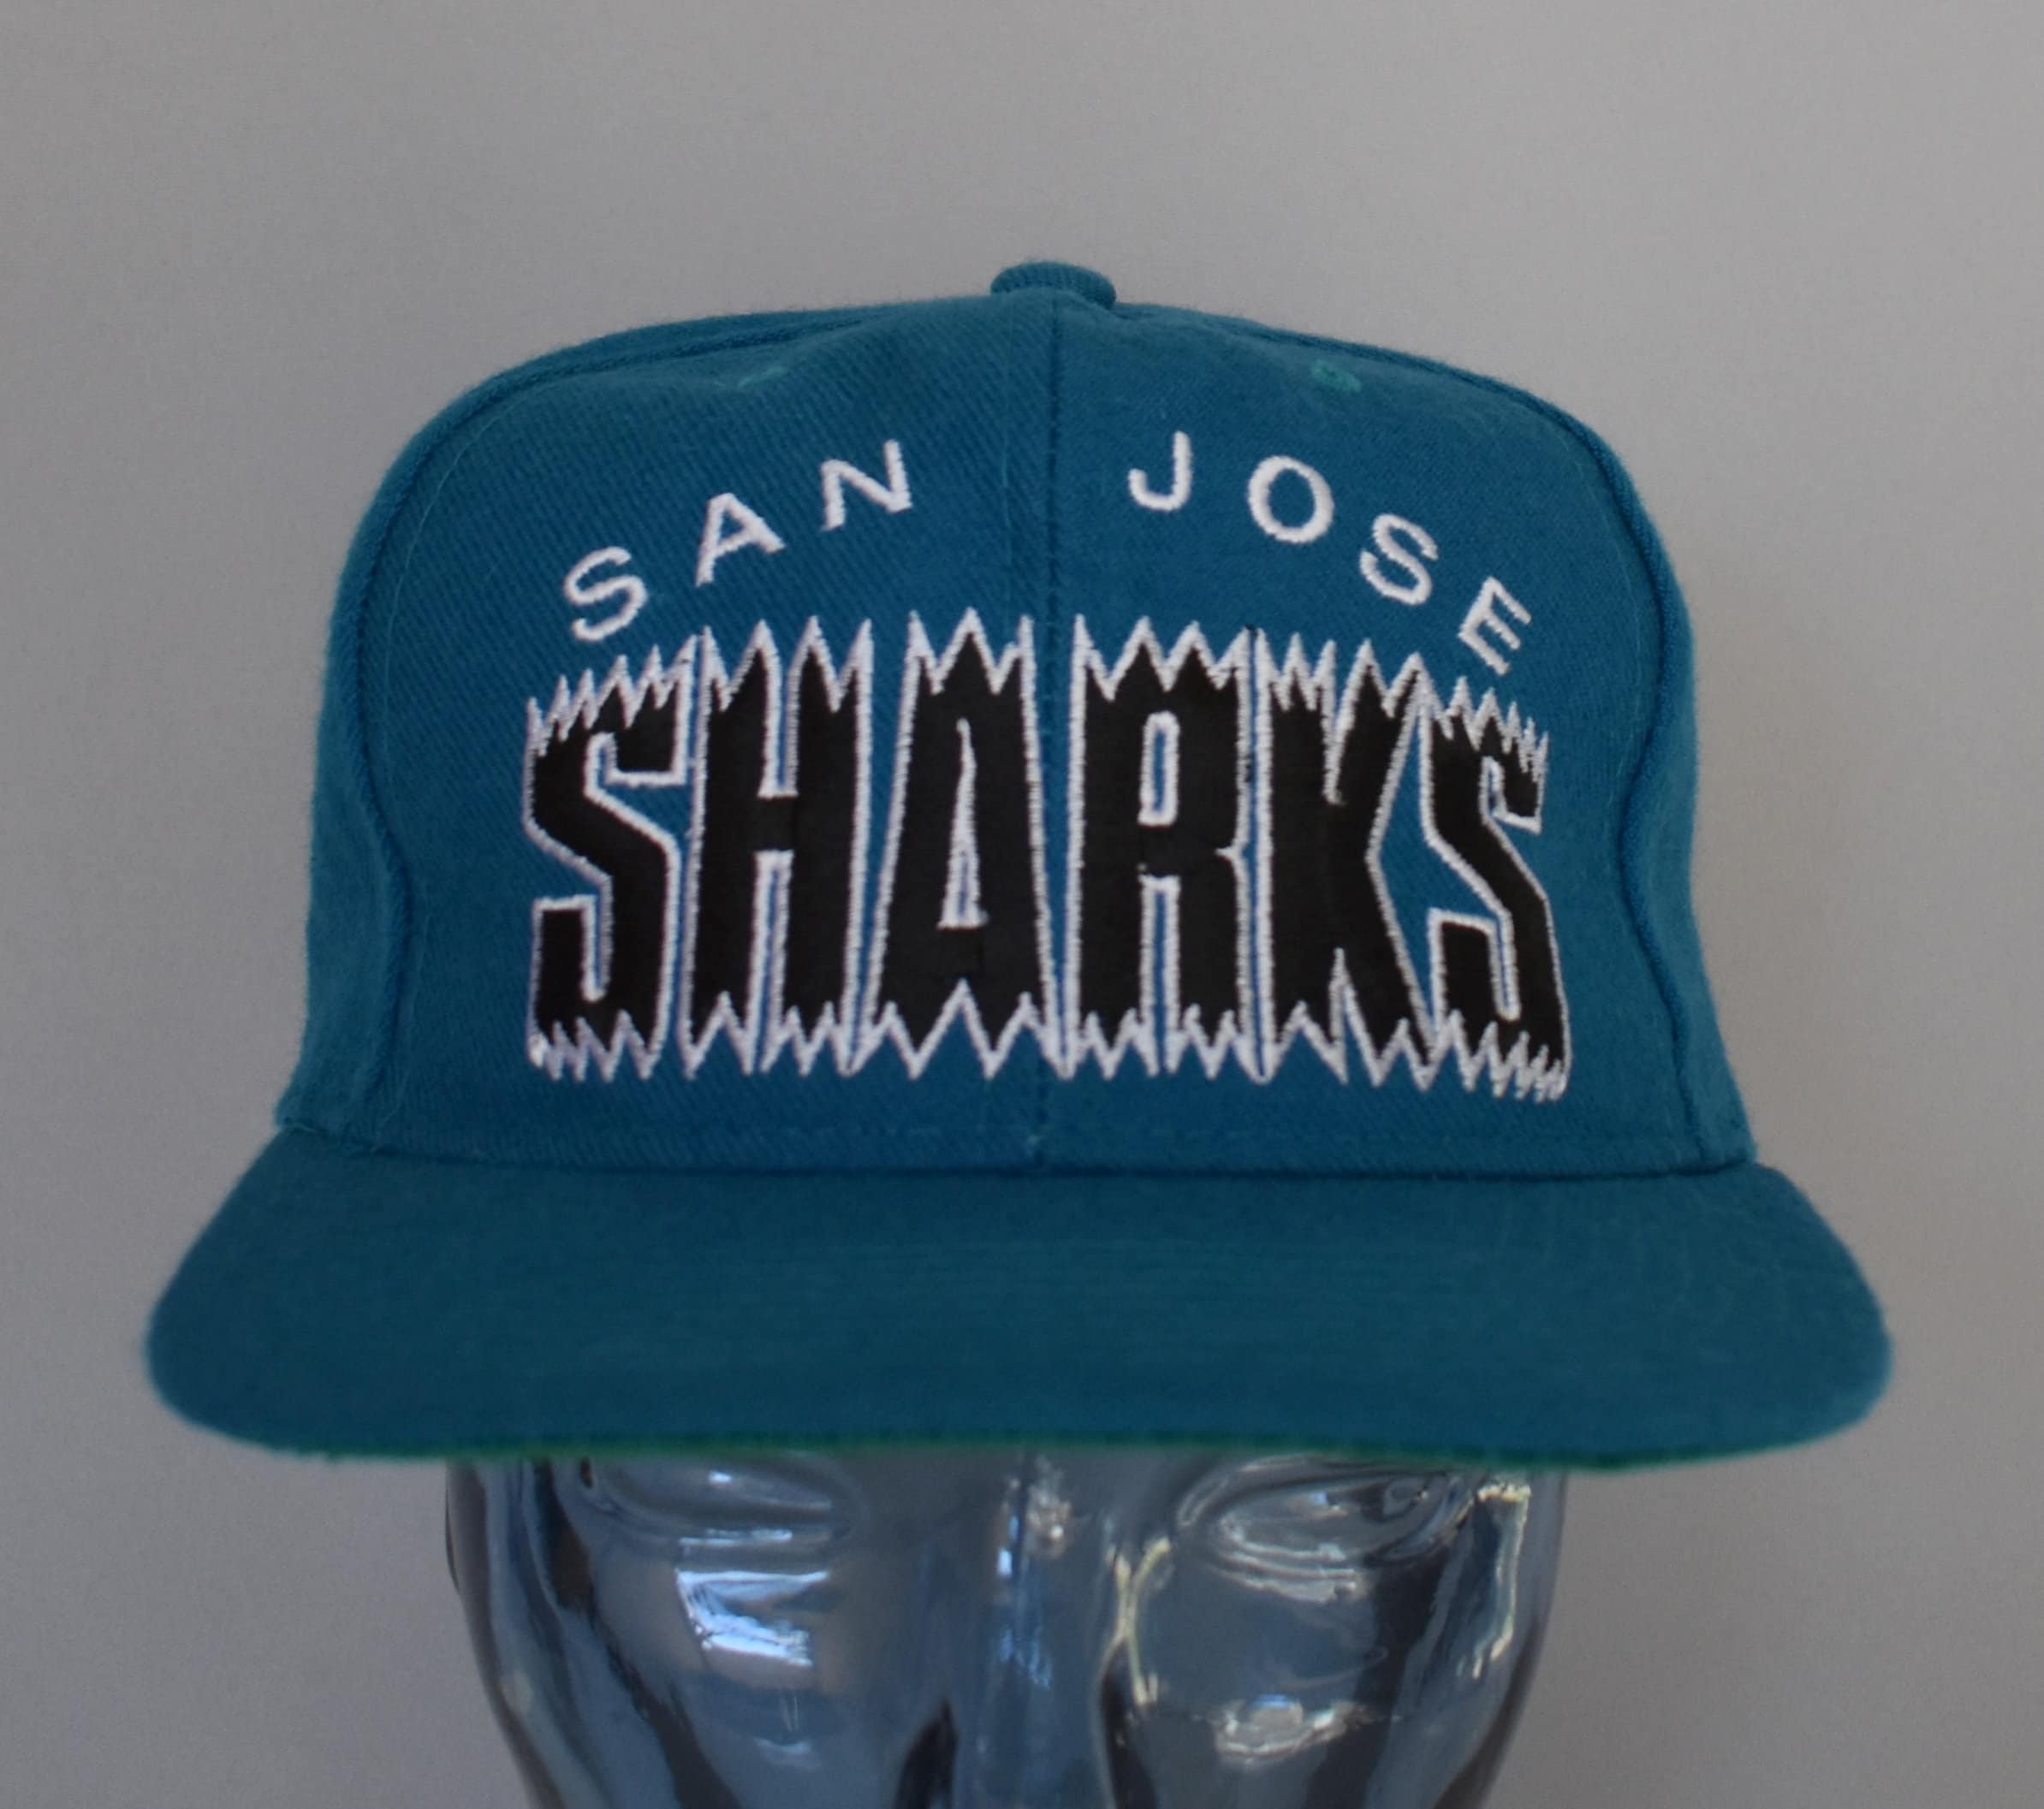 Vintage 90's San Jose Sharks NHL Ice Hockey Front Row Snapback Hat